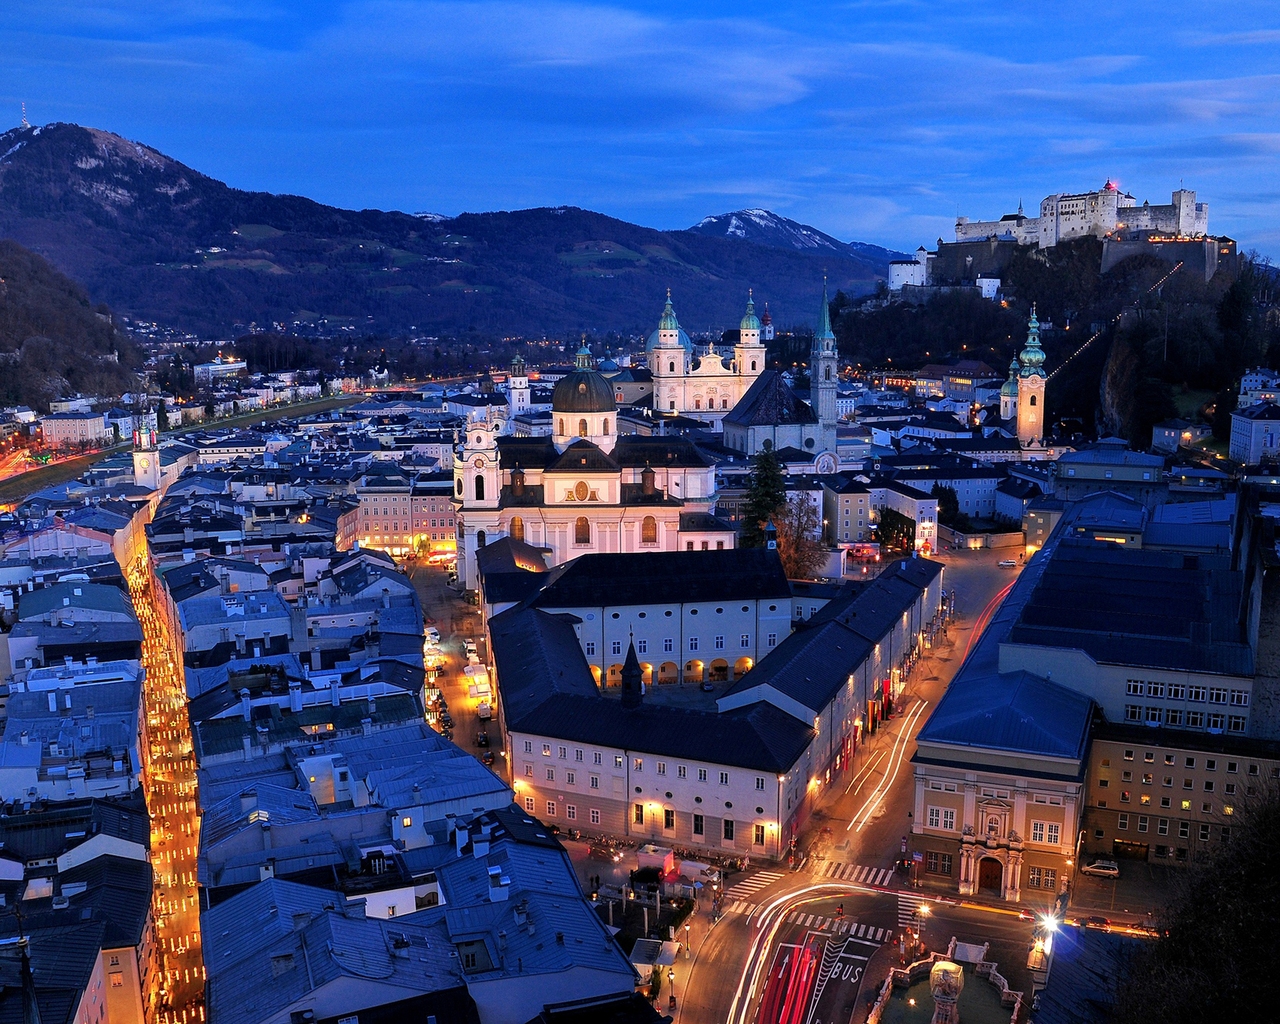 Salzburg Night for 1280 x 1024 resolution